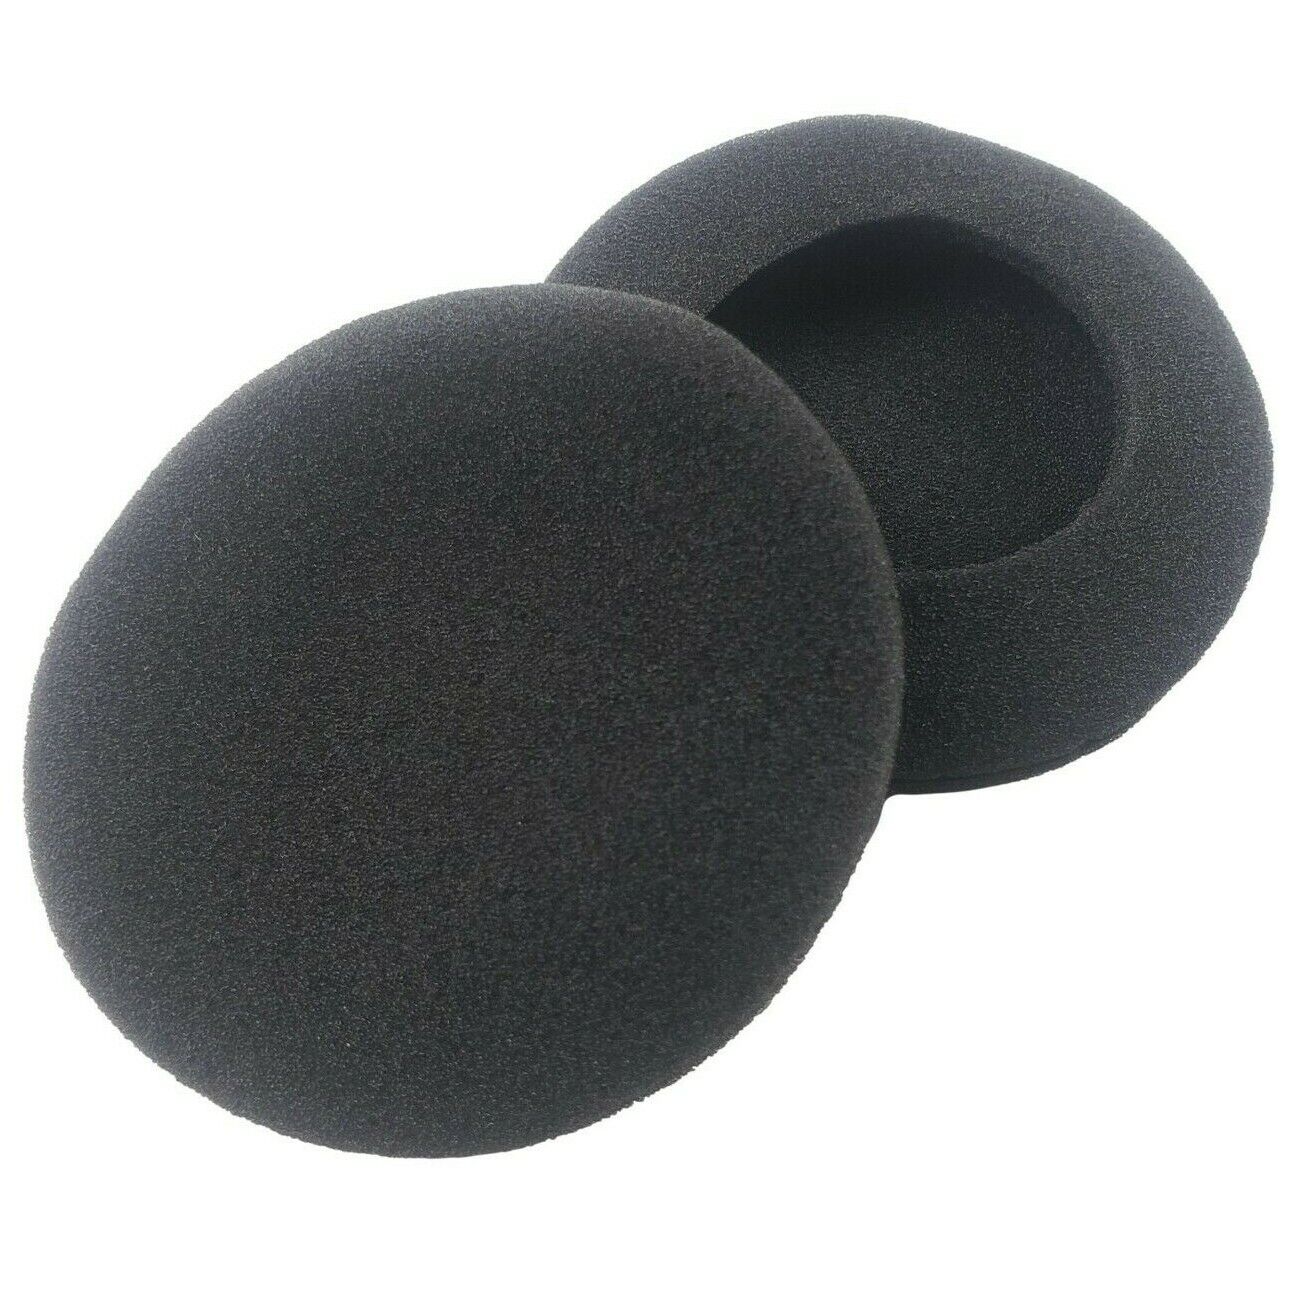 Replacement Foam Pad Ear Cushion Ear Pad Set for Logitech H800 Wireless Headset